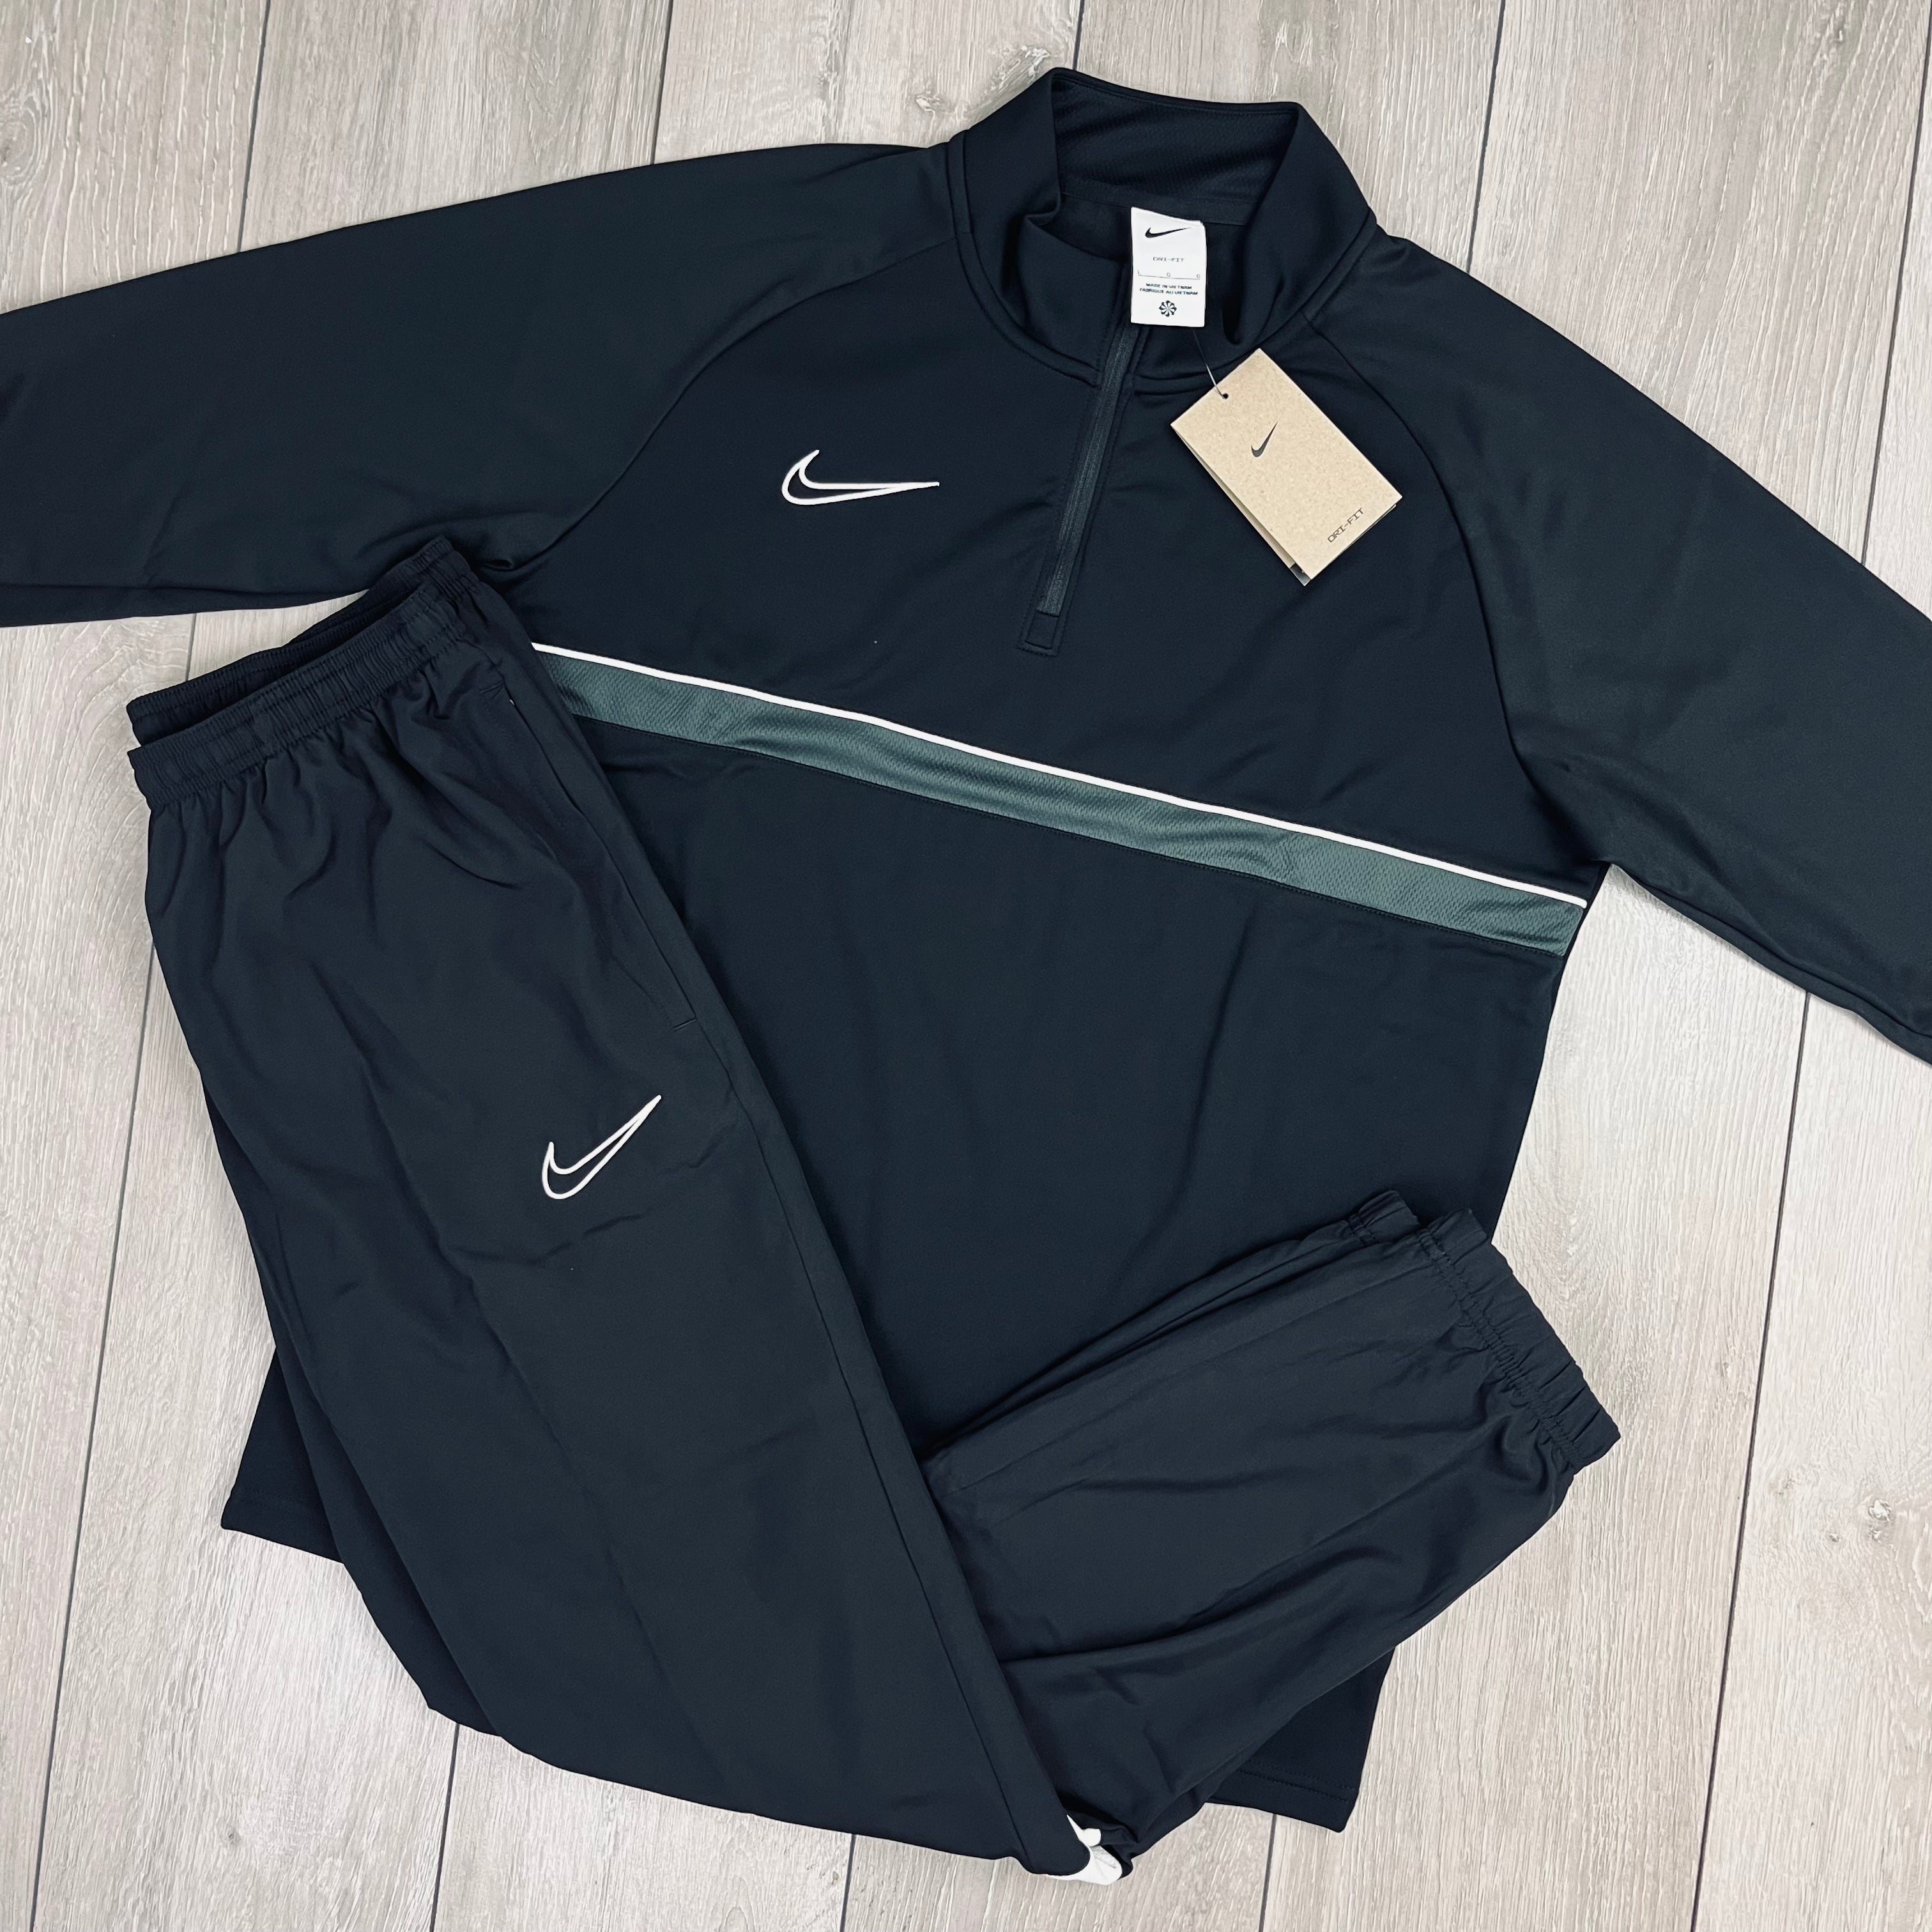 Nike Dri-Fit Set - Black